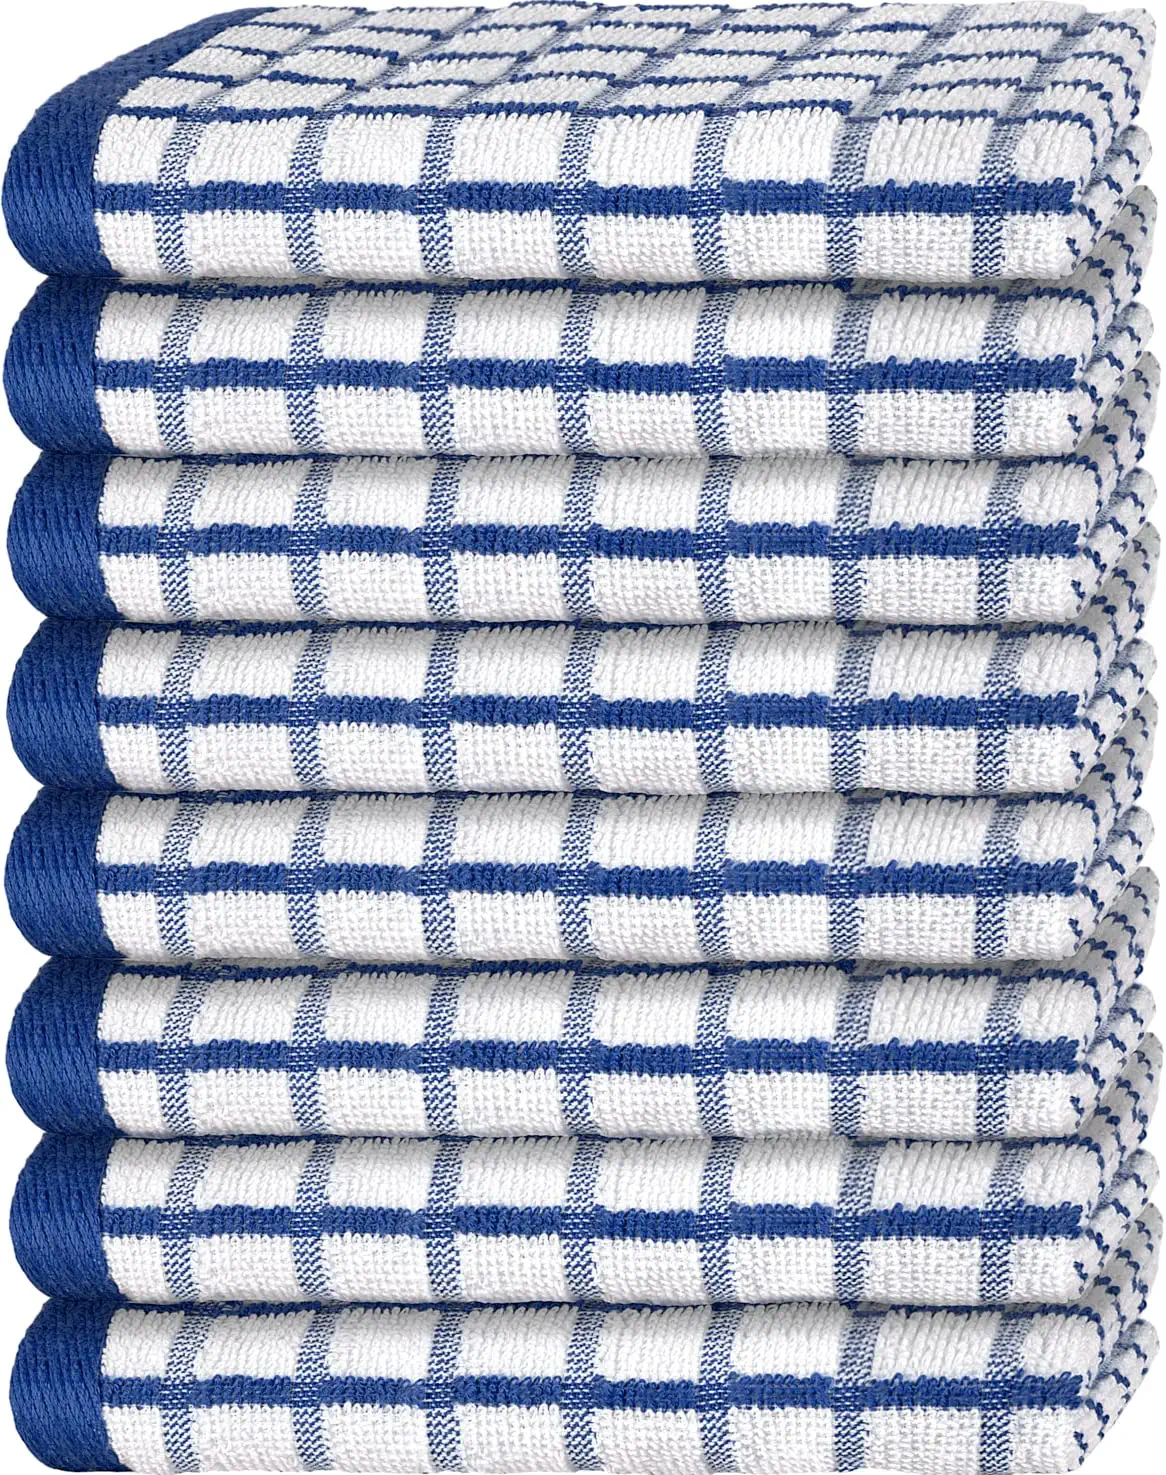 Atlas White Huck Towels 16x26 100% Eco-Friendly Cotton